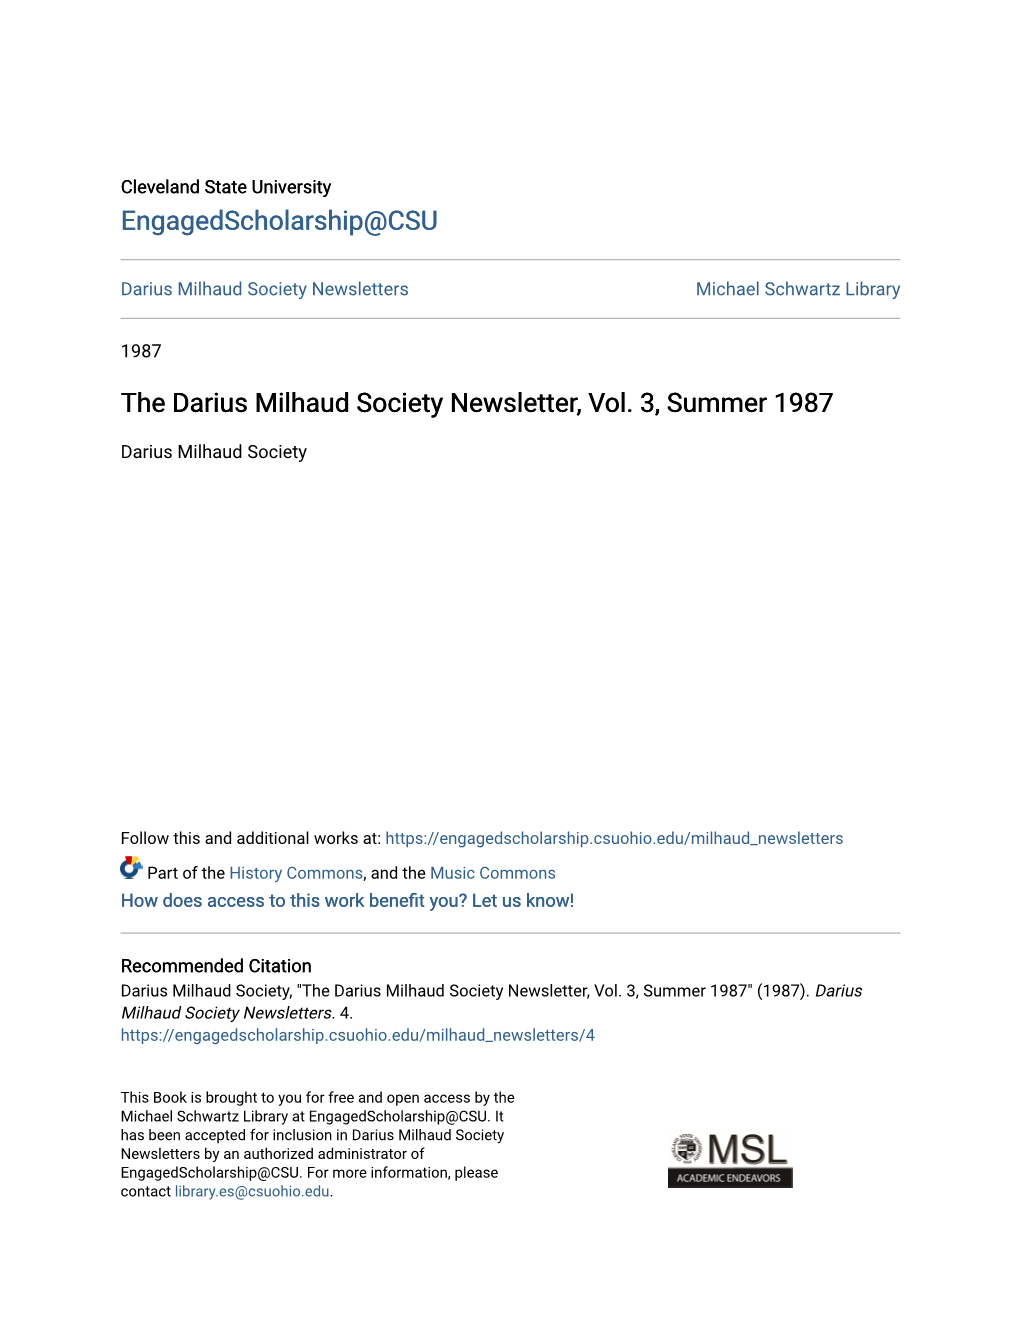 The Darius Milhaud Society Newsletter, Vol. 3, Summer 1987